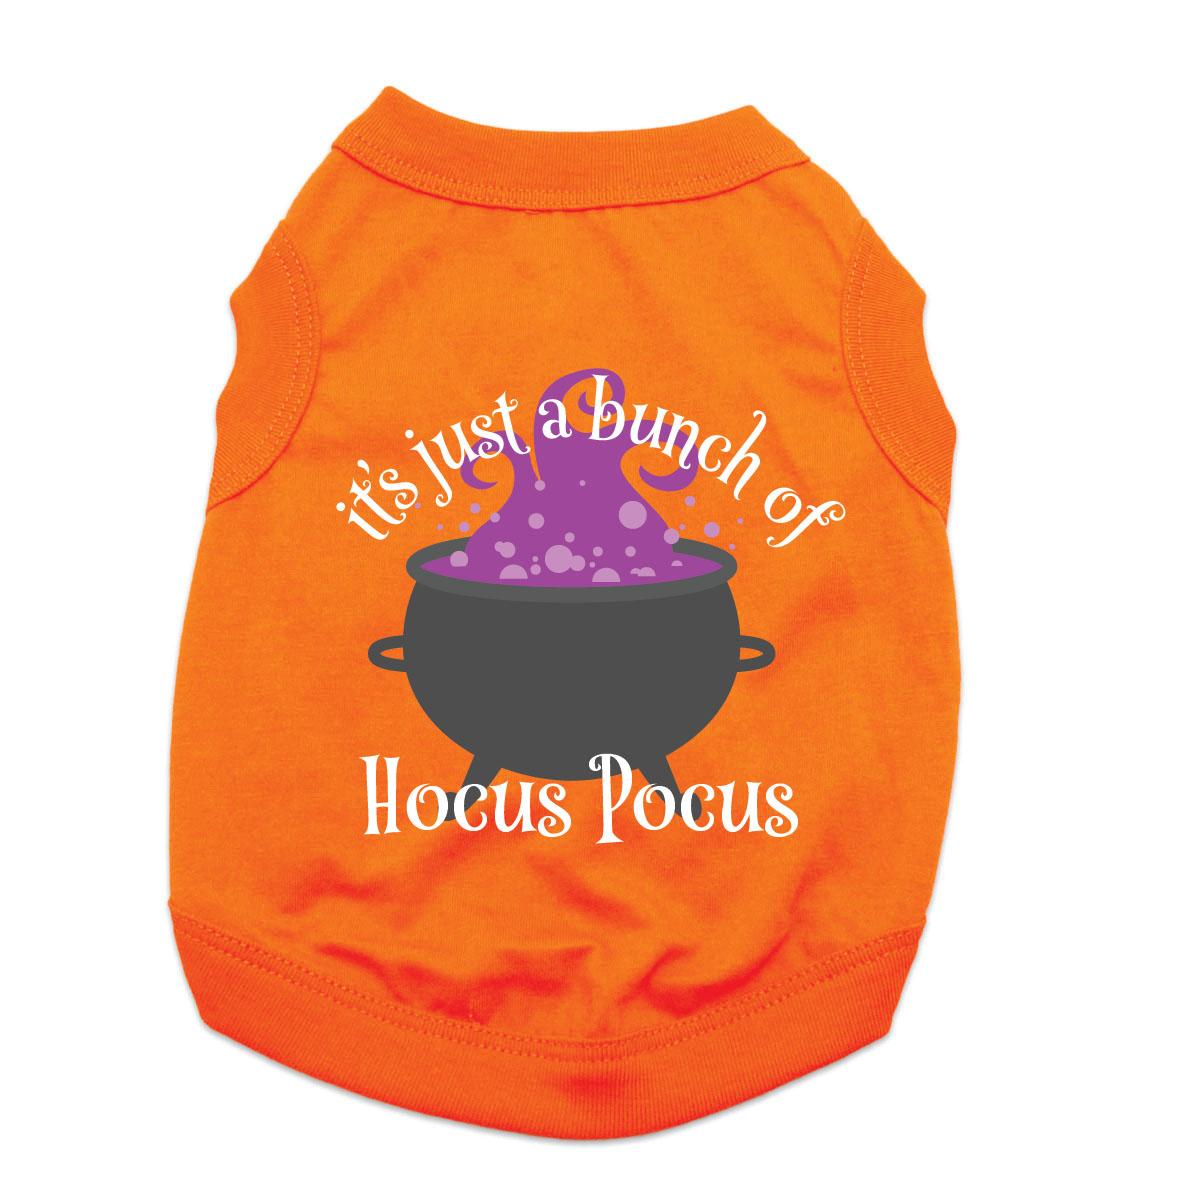 It's Just a Bunch of Hocus Pocus Dog Shirt  - Orange